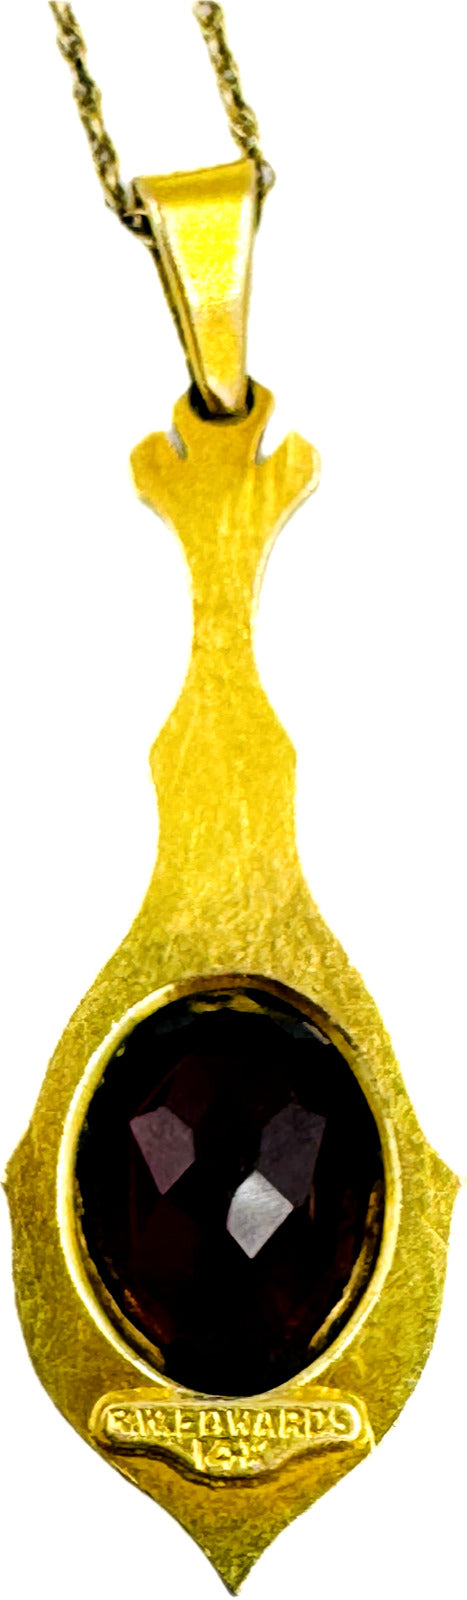 Victorian R.W. Edwards 14k yellow Gold Garnet Pendant Necklace